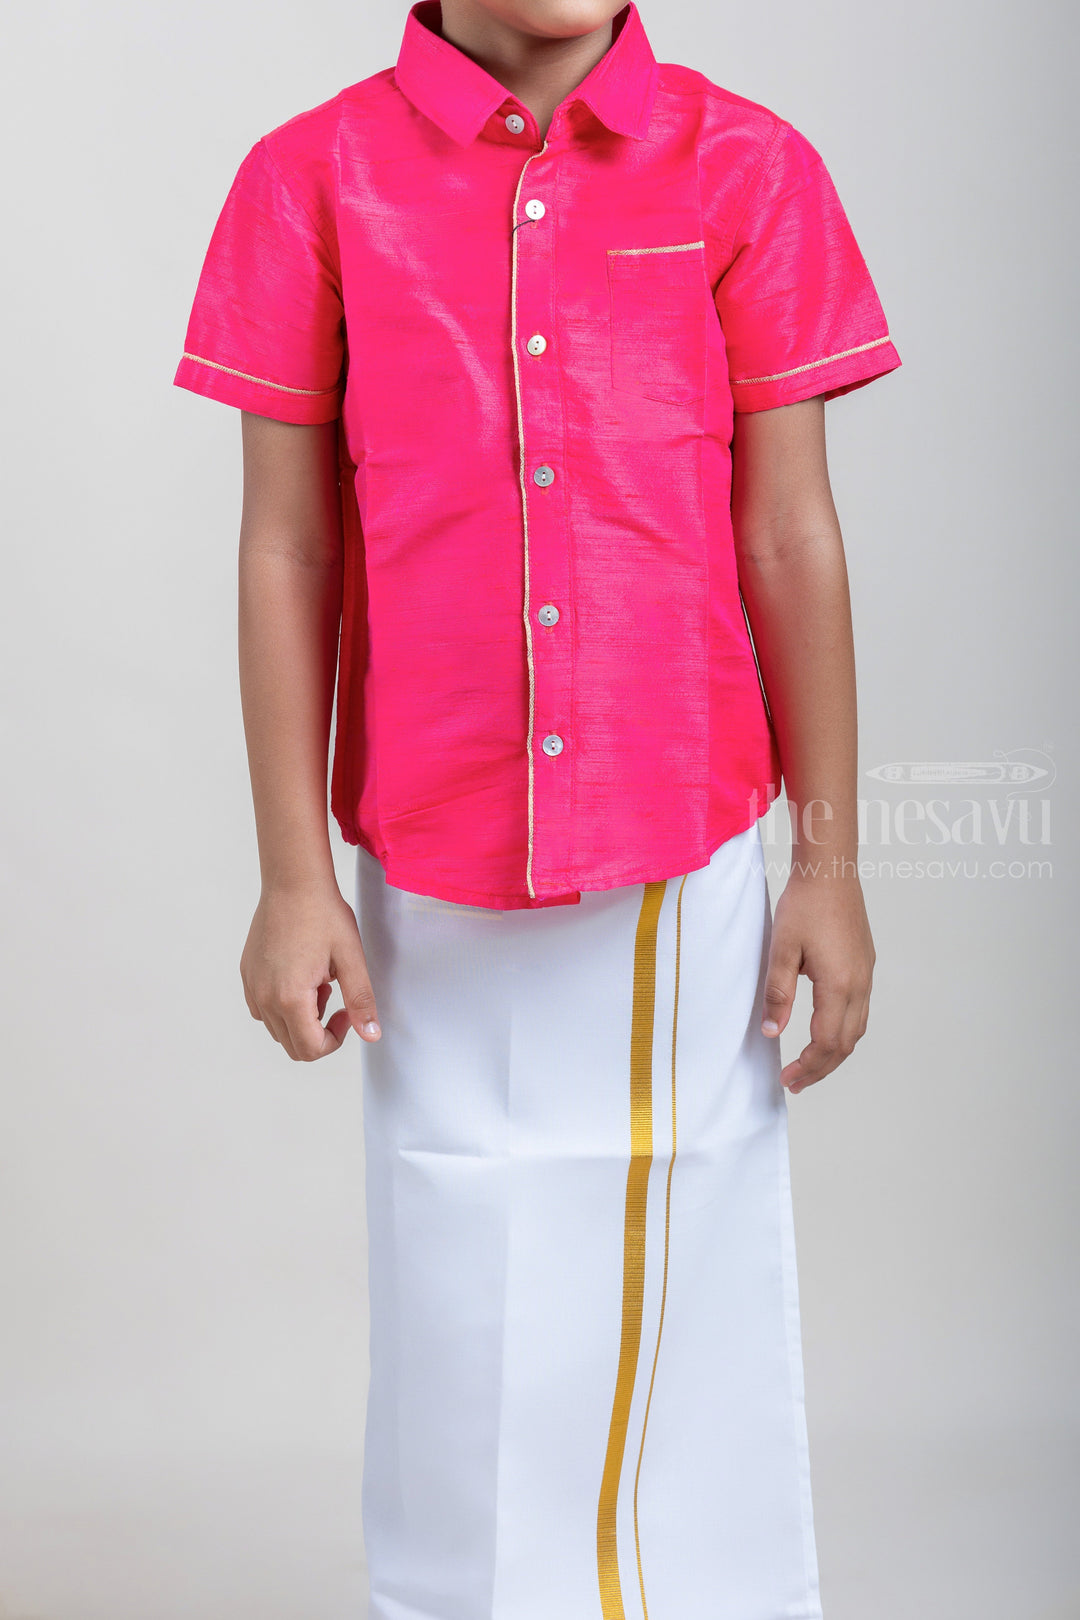 The Nesavu Boys Shirts Royal Pink Traditional Boys Pattu Shirt With Pocket psr silks Nesavu